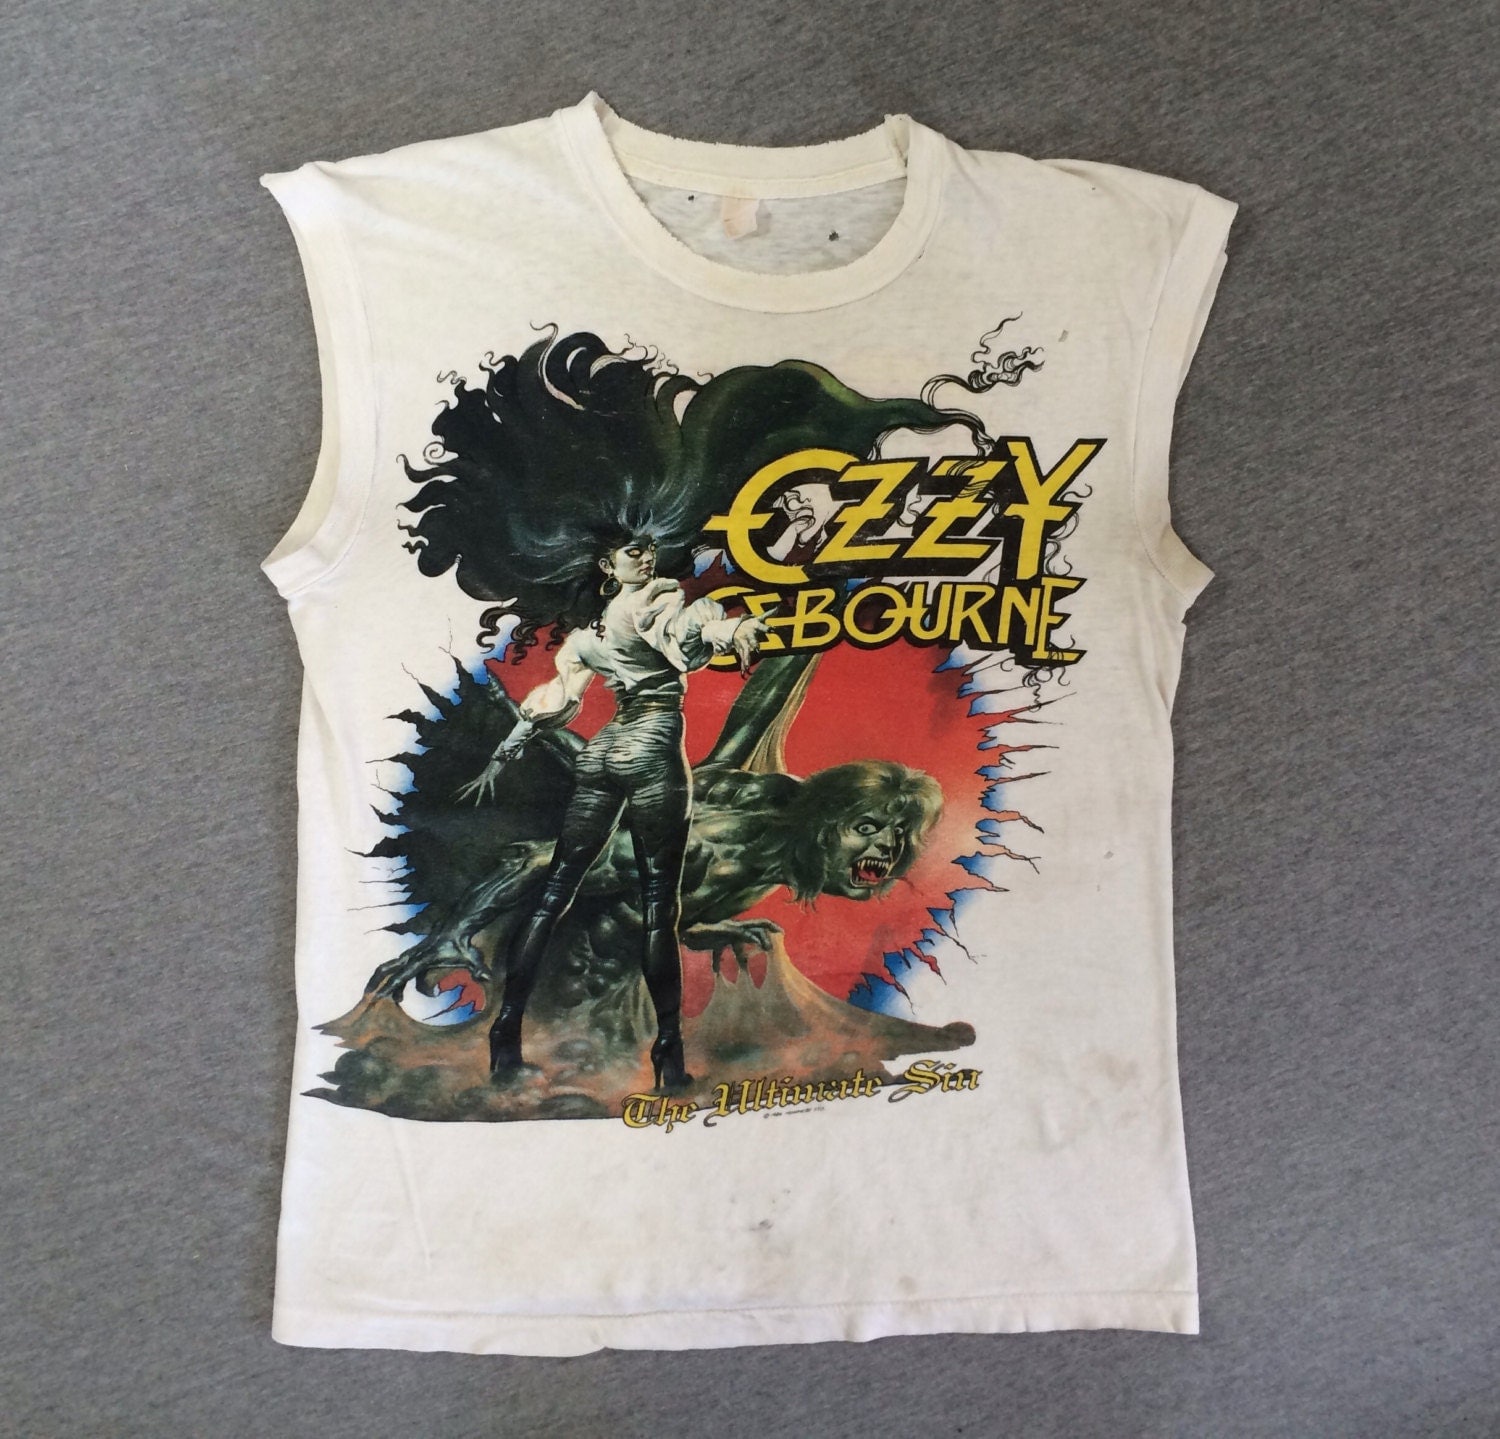 OZZY OSBOURNE Shirt 1986 Vintage Tour/ Original The Ultimate